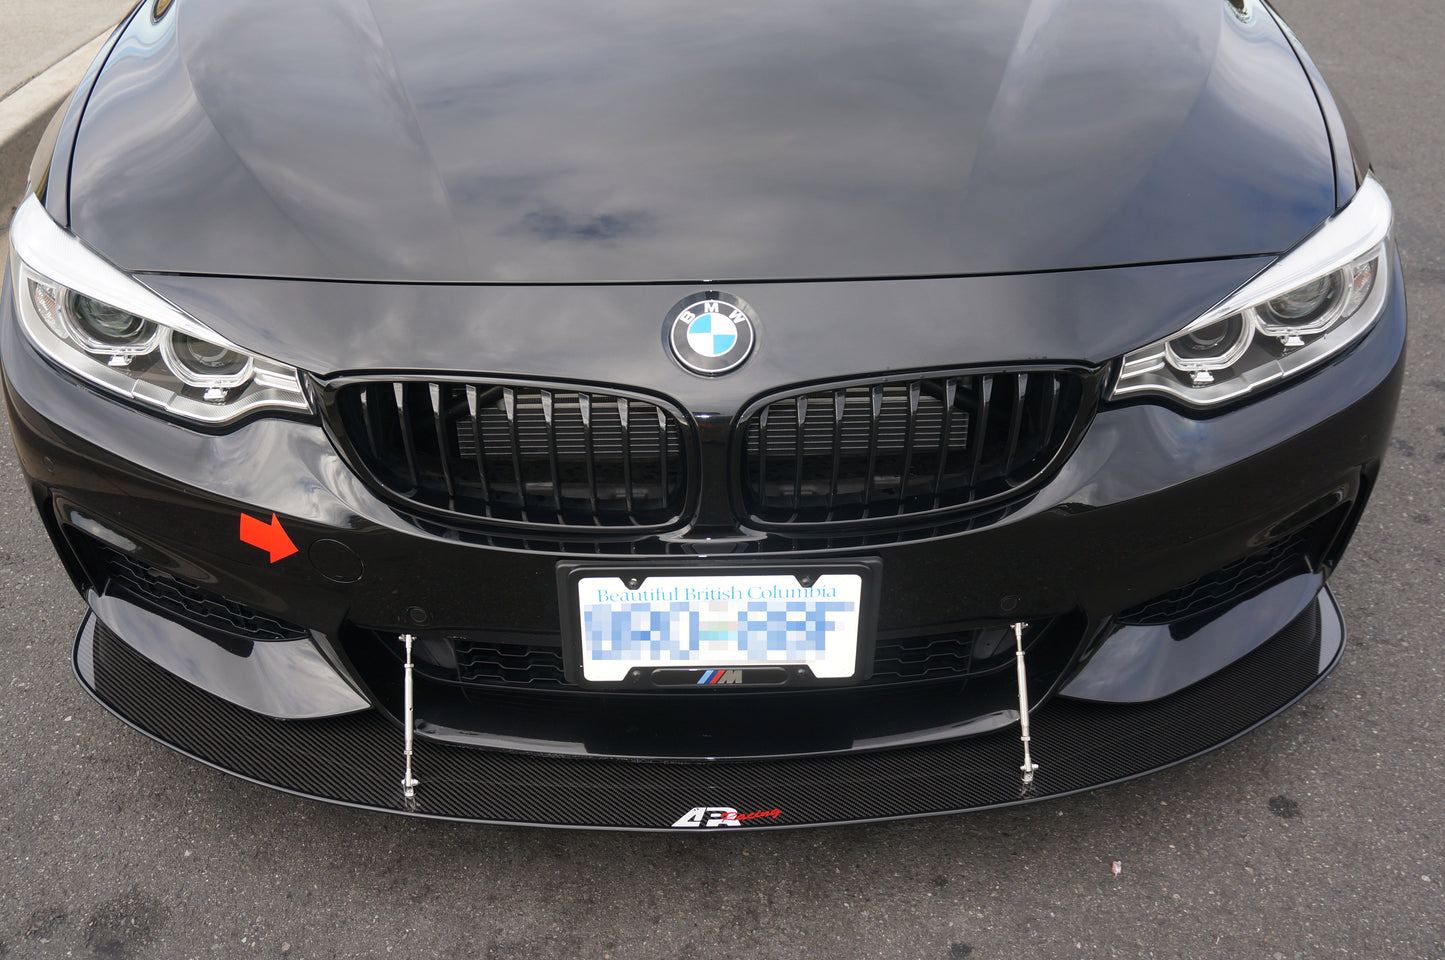 BMW 435i Stock Bumper Front Wind Splitter 2016-2019